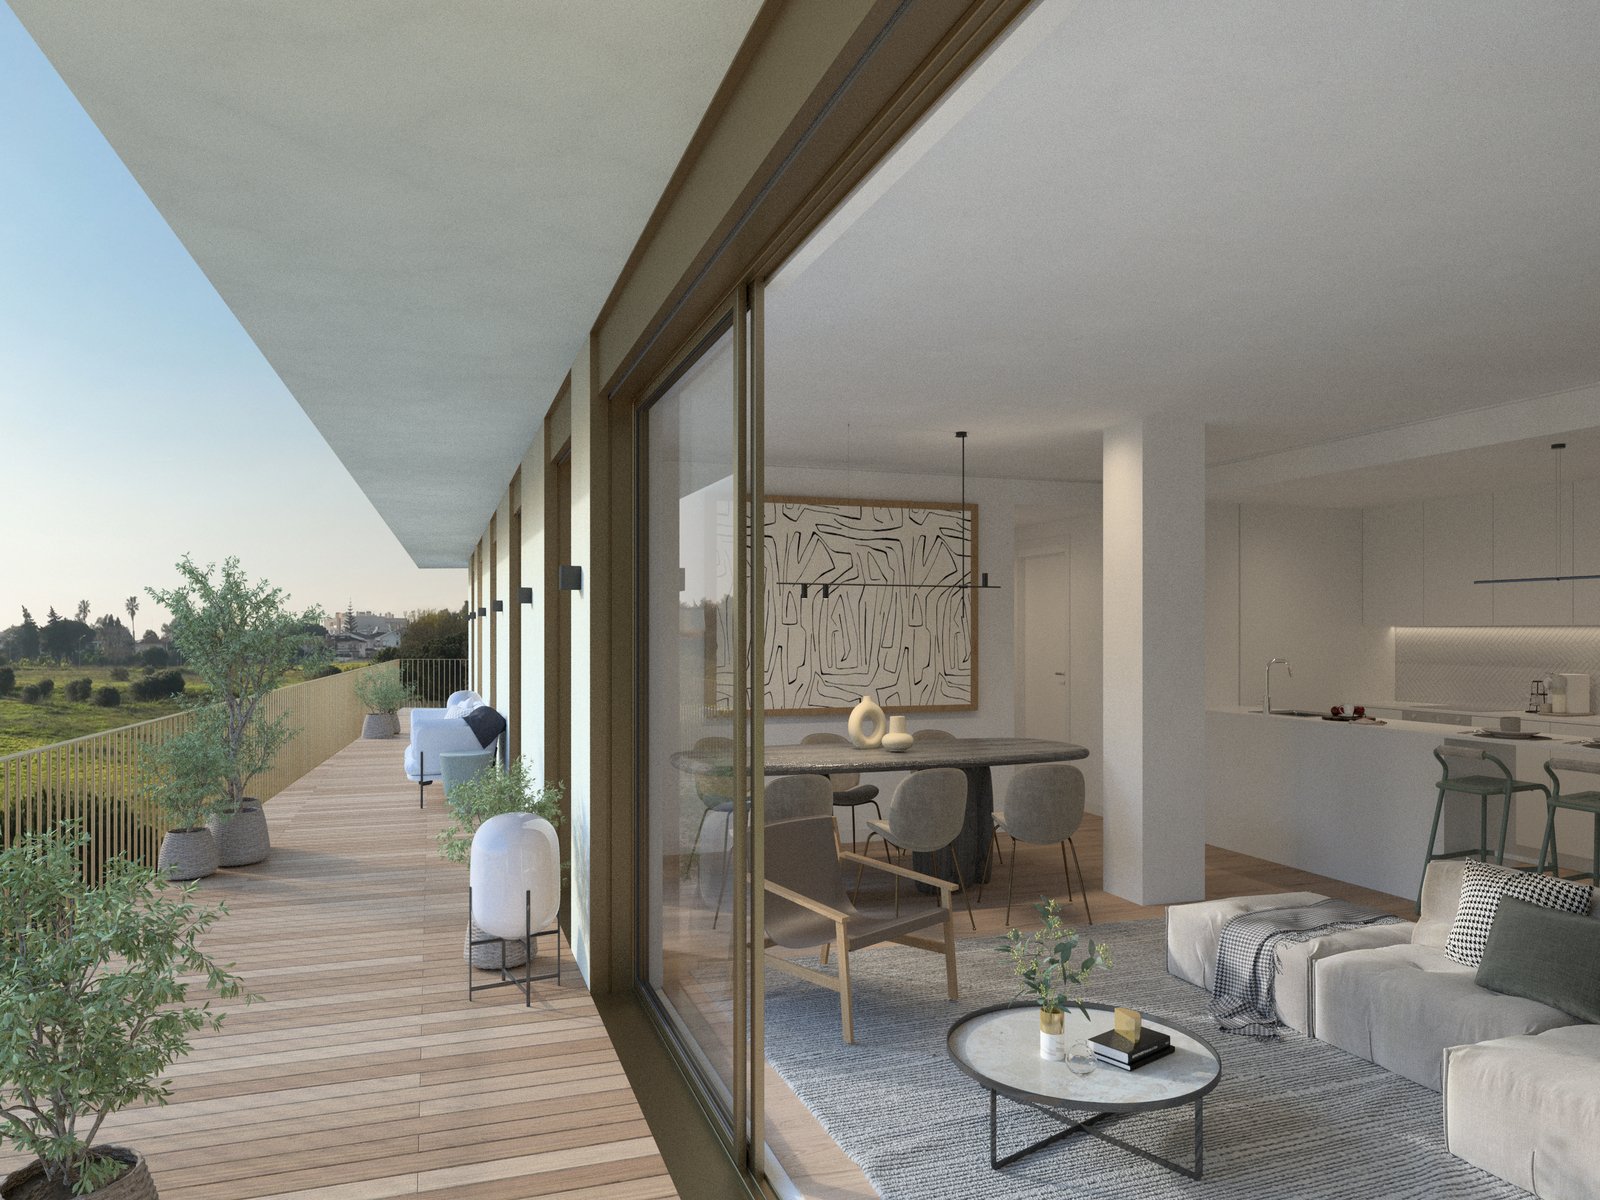 2 bedroom apartment with balcony in new development in Miraflores 4105912066